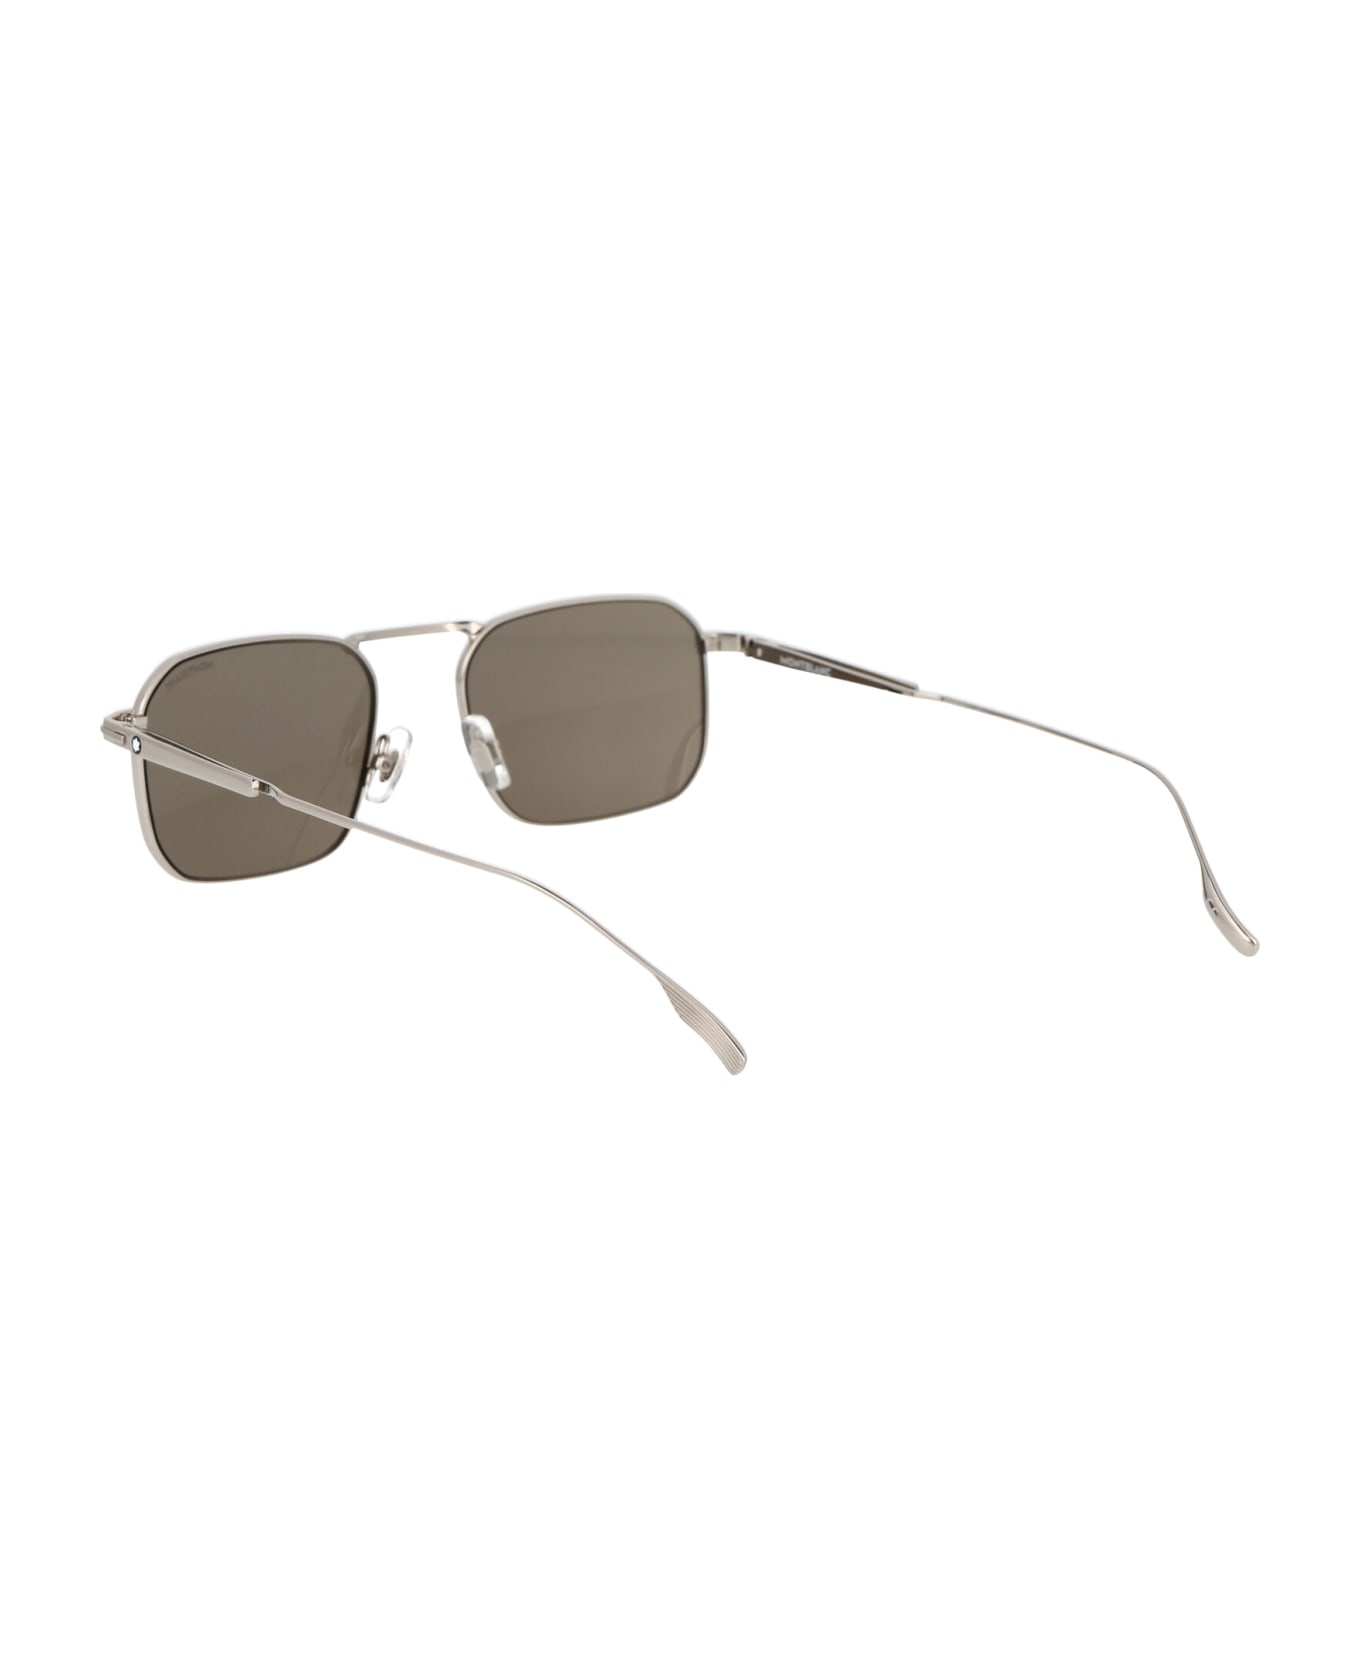 Montblanc Mb0218s Sunglasses - 003 Sonny Havana Materica sunglasses